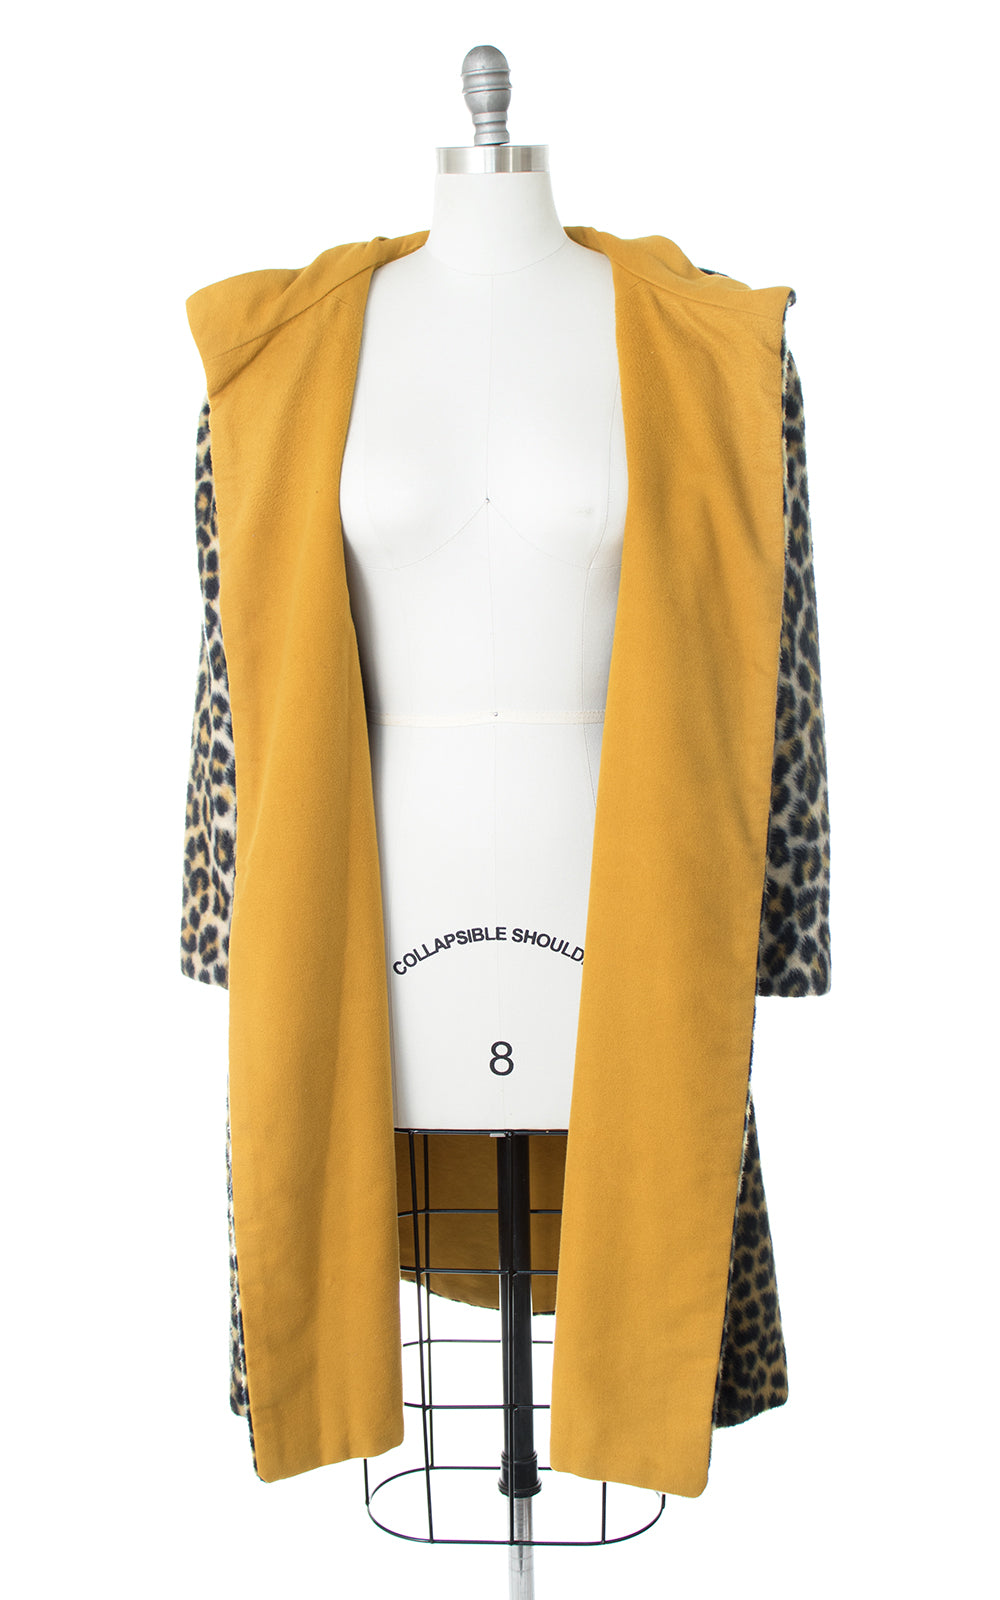 1960s Reversible Leopard Print Mustard Yellow Swing Coat